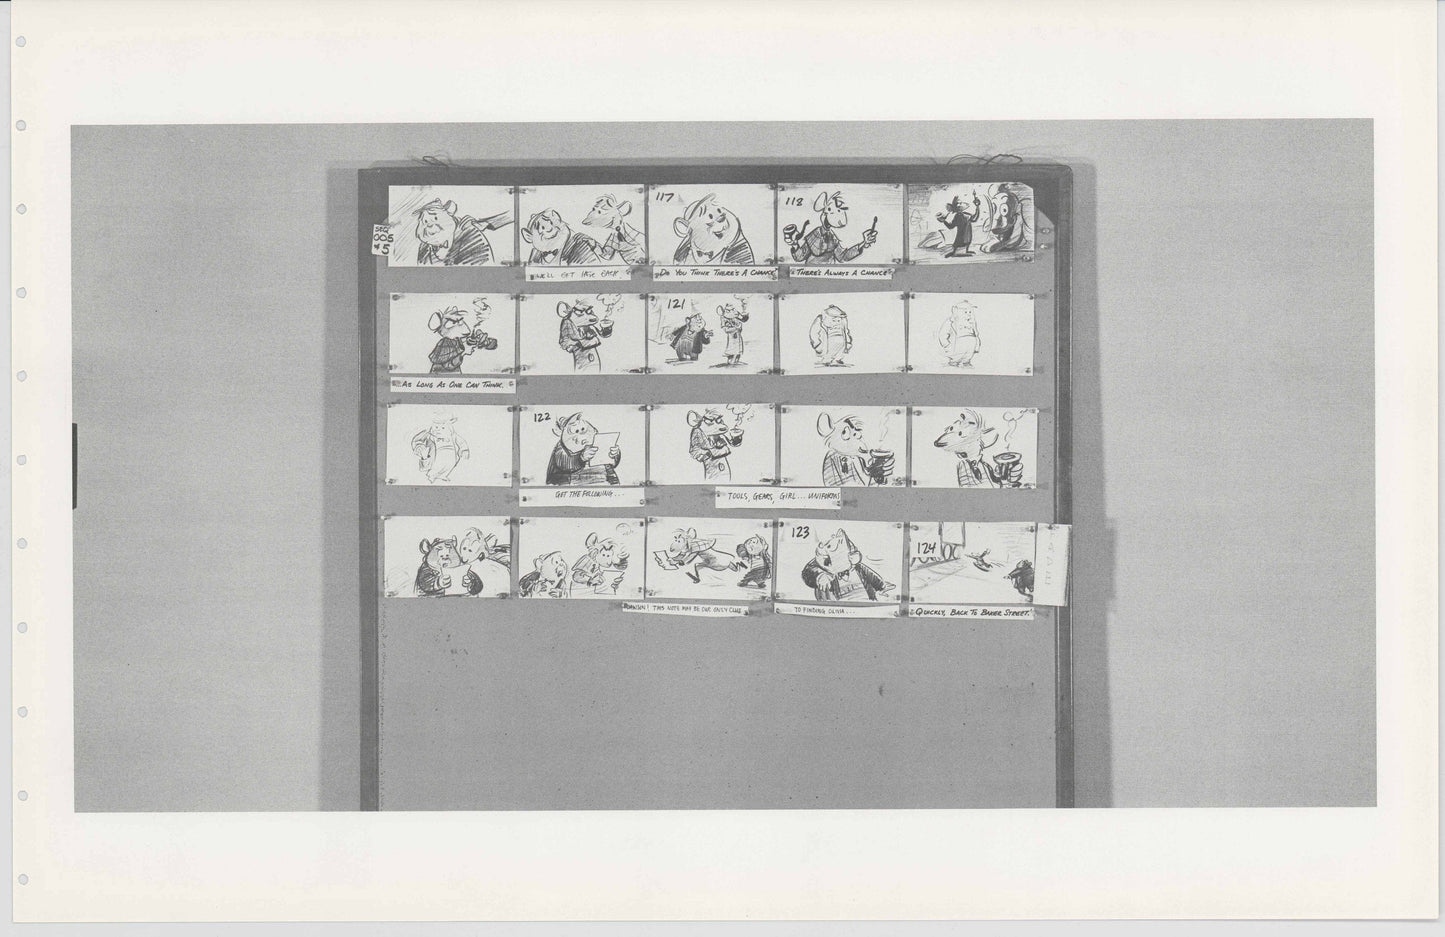 Great Mouse Detective Walt Disney Production Animation Storyboard Sheet 1986 249